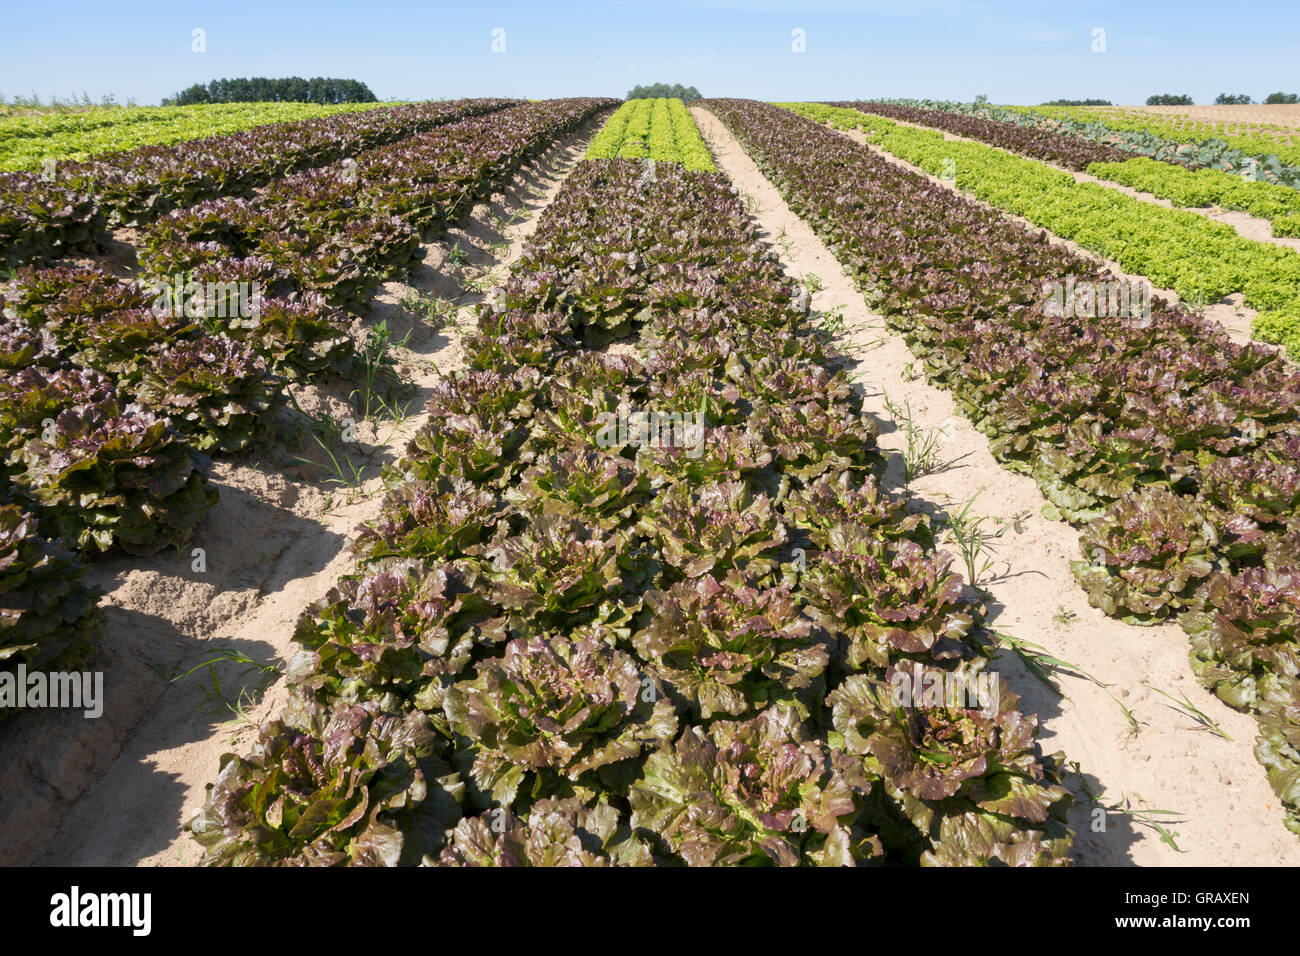 Salad On A Field Stock Photo